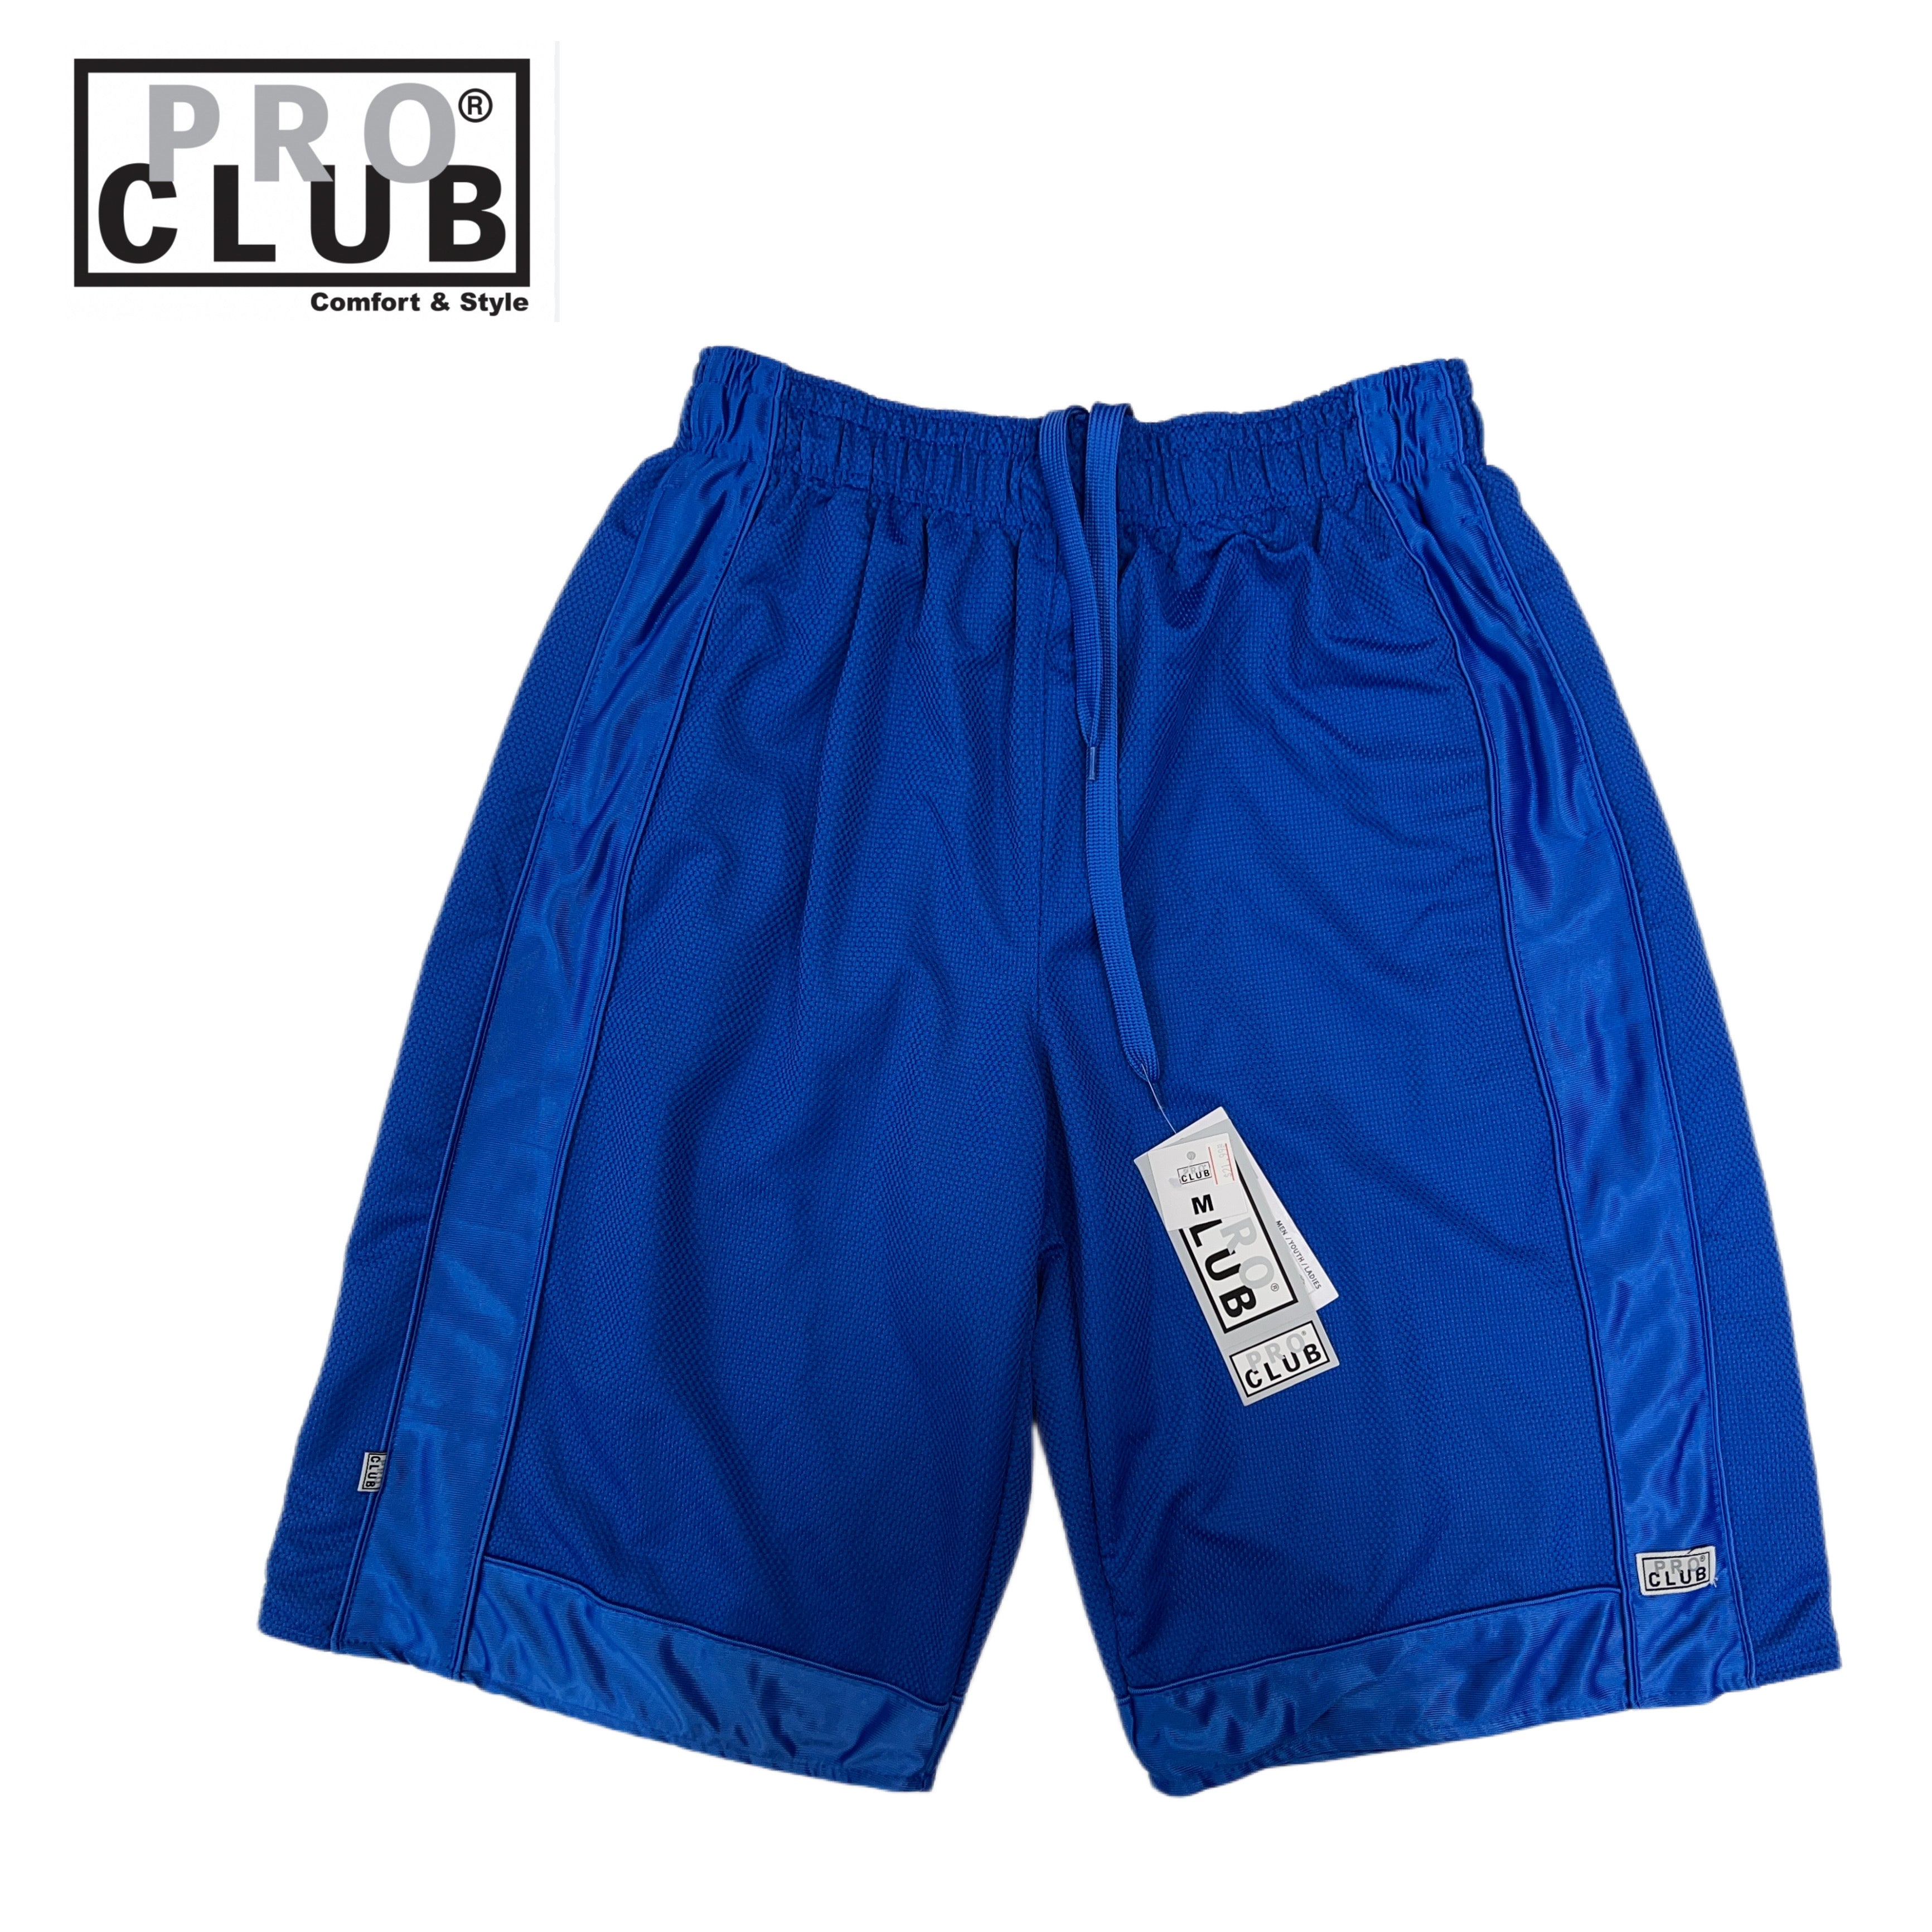 Pro Club Basketball Shorts (More Colors)